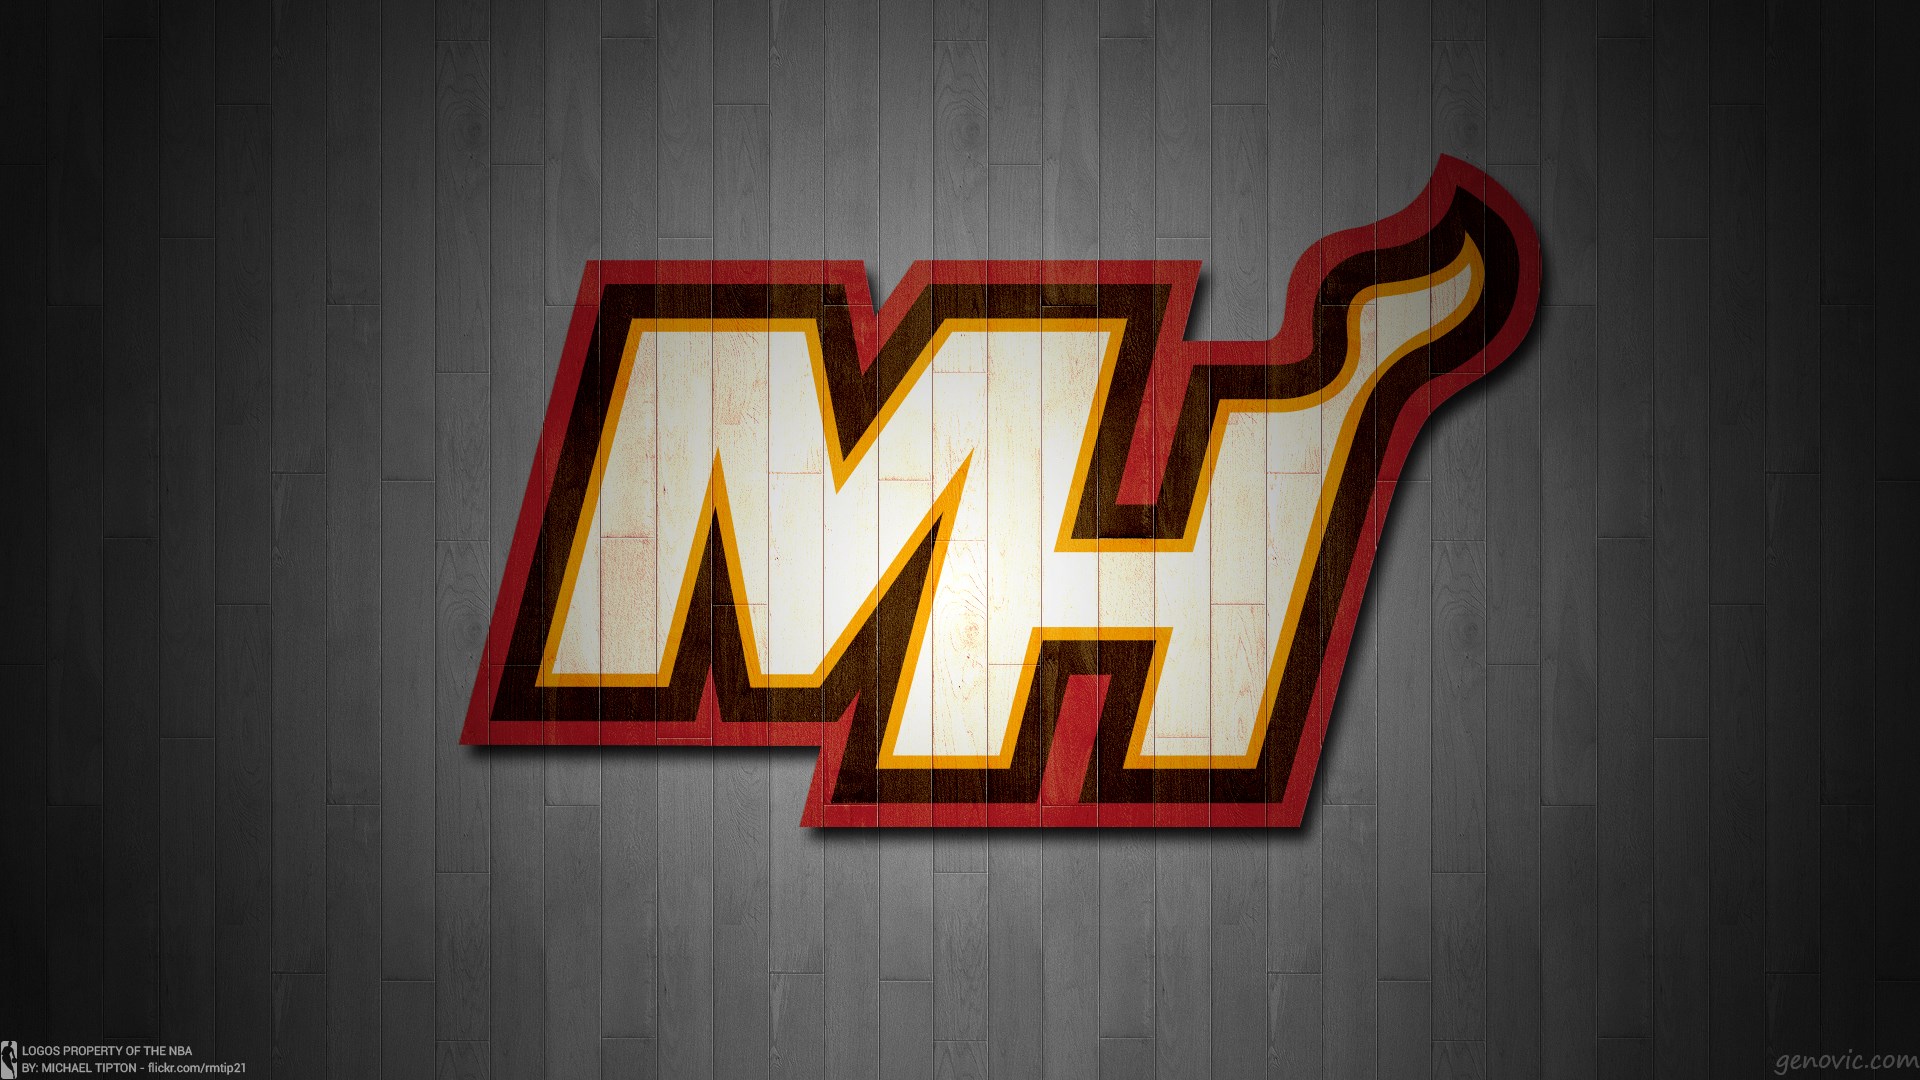 Miami Heat Wallpaper Logo Image